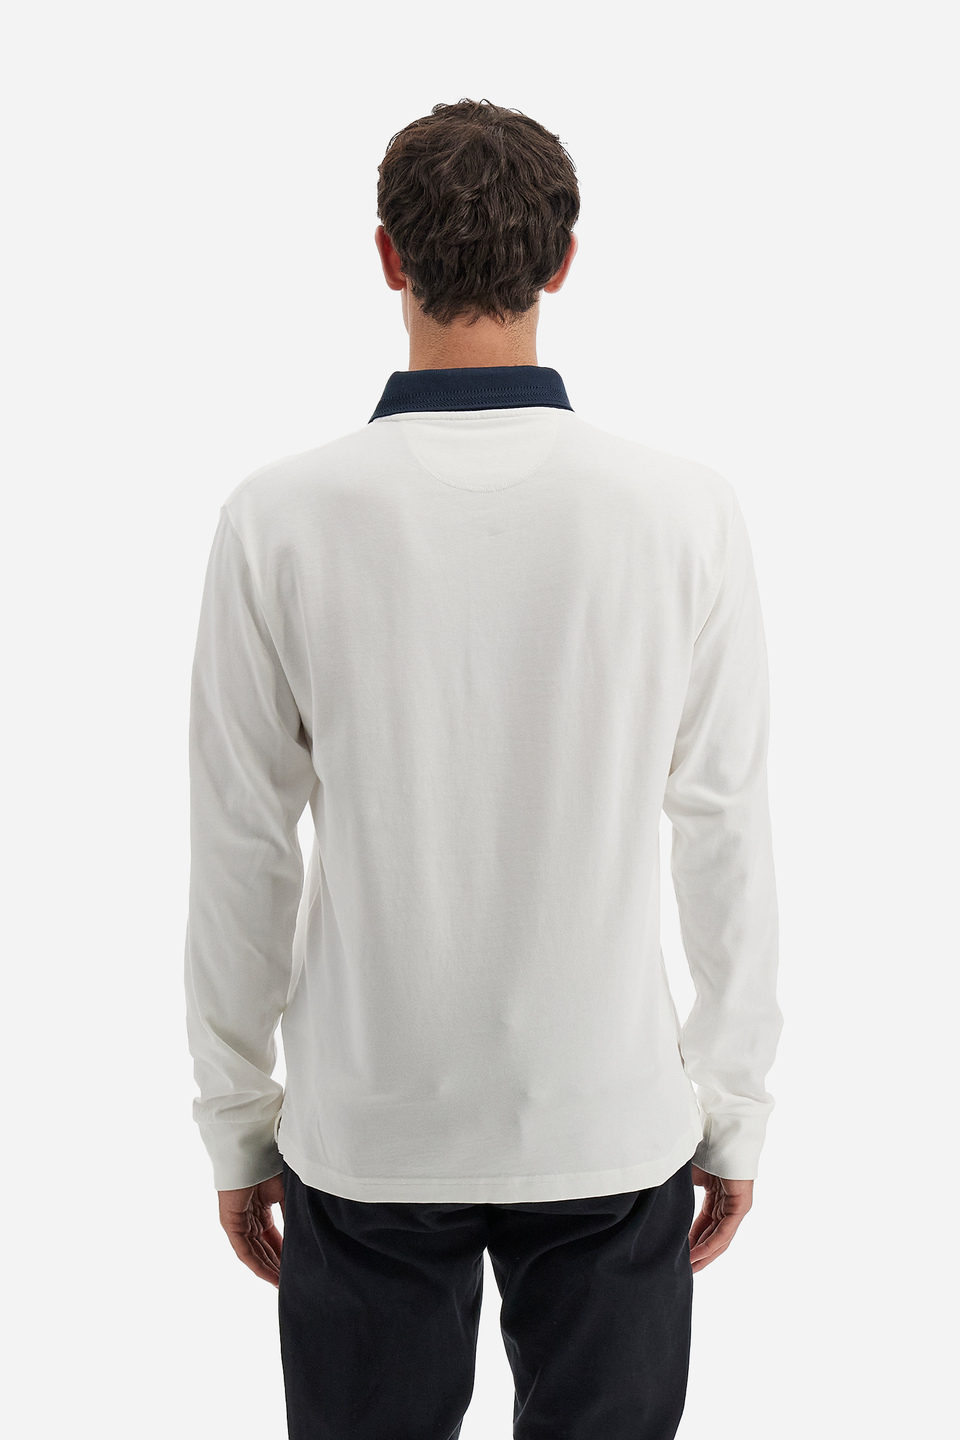 Polo Academy Herren-Langarm-Poloshirt mit kleinem Kontrastkragen-Logo - Vardis | La Martina - Official Online Shop